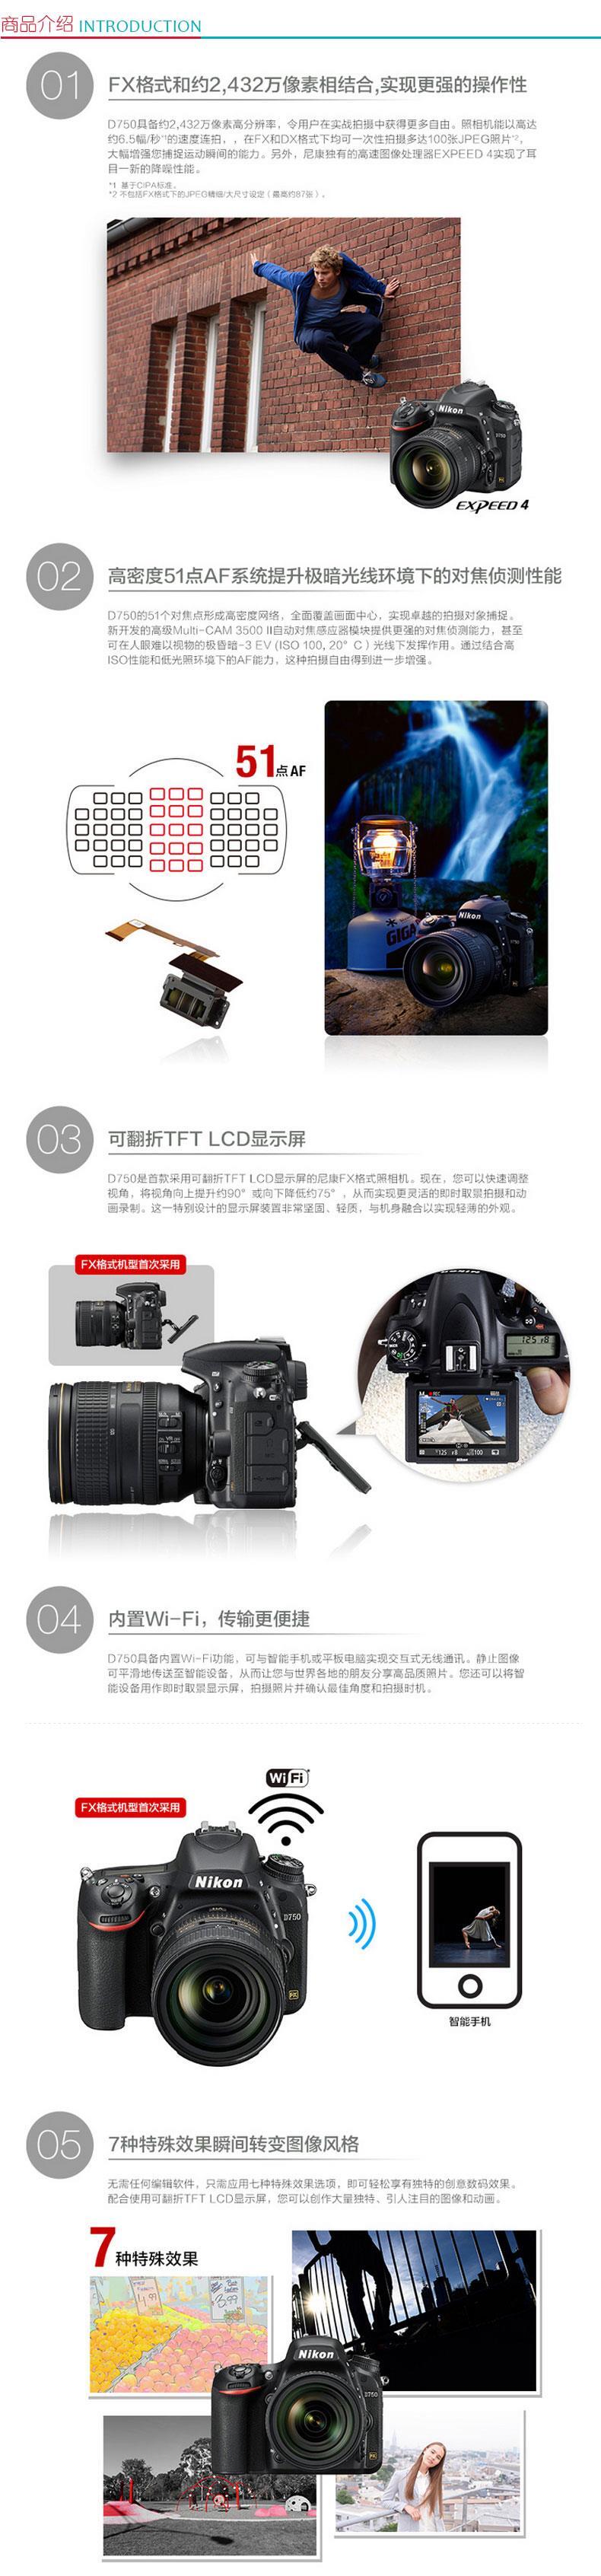 尼康 Nikon 单反套机 D750 (含AF-S 尼克尔 24-120mm f/4G ED VR镜头) 